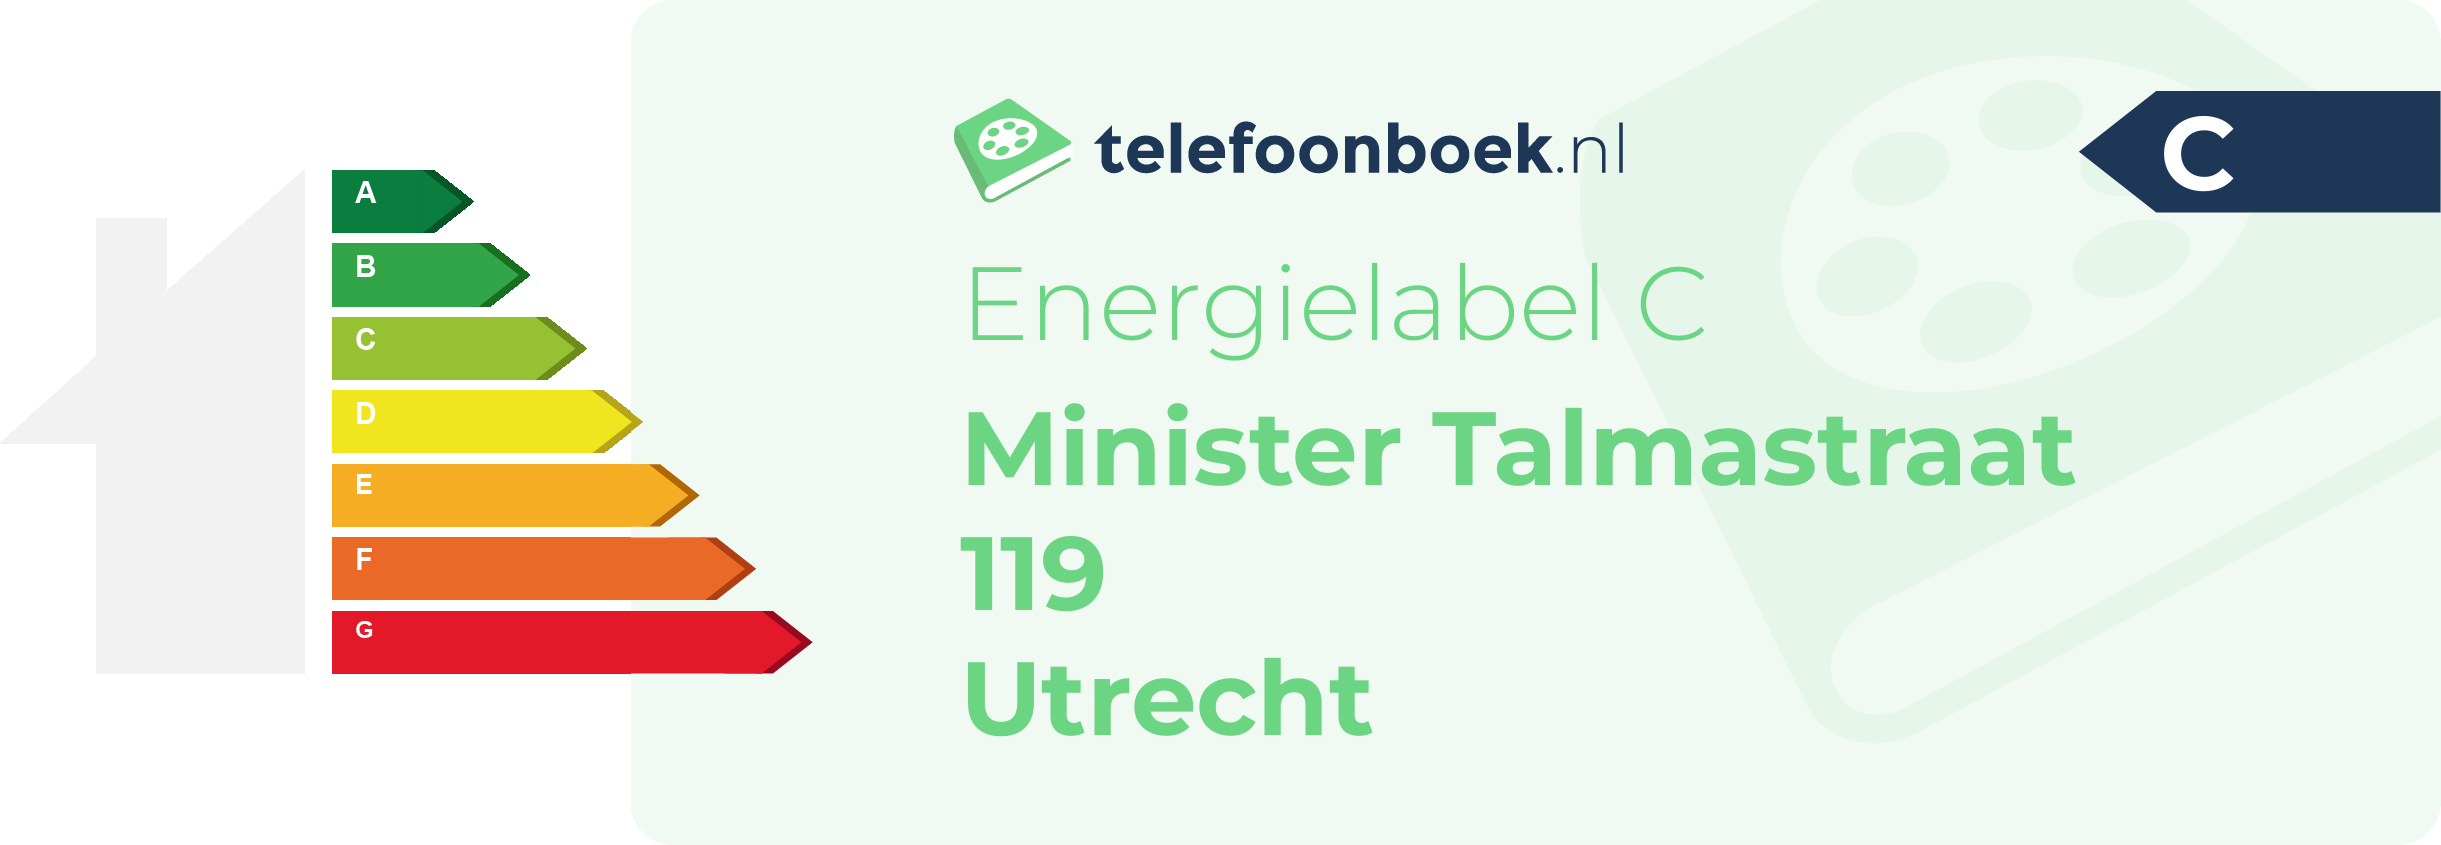 Energielabel Minister Talmastraat 119 Utrecht